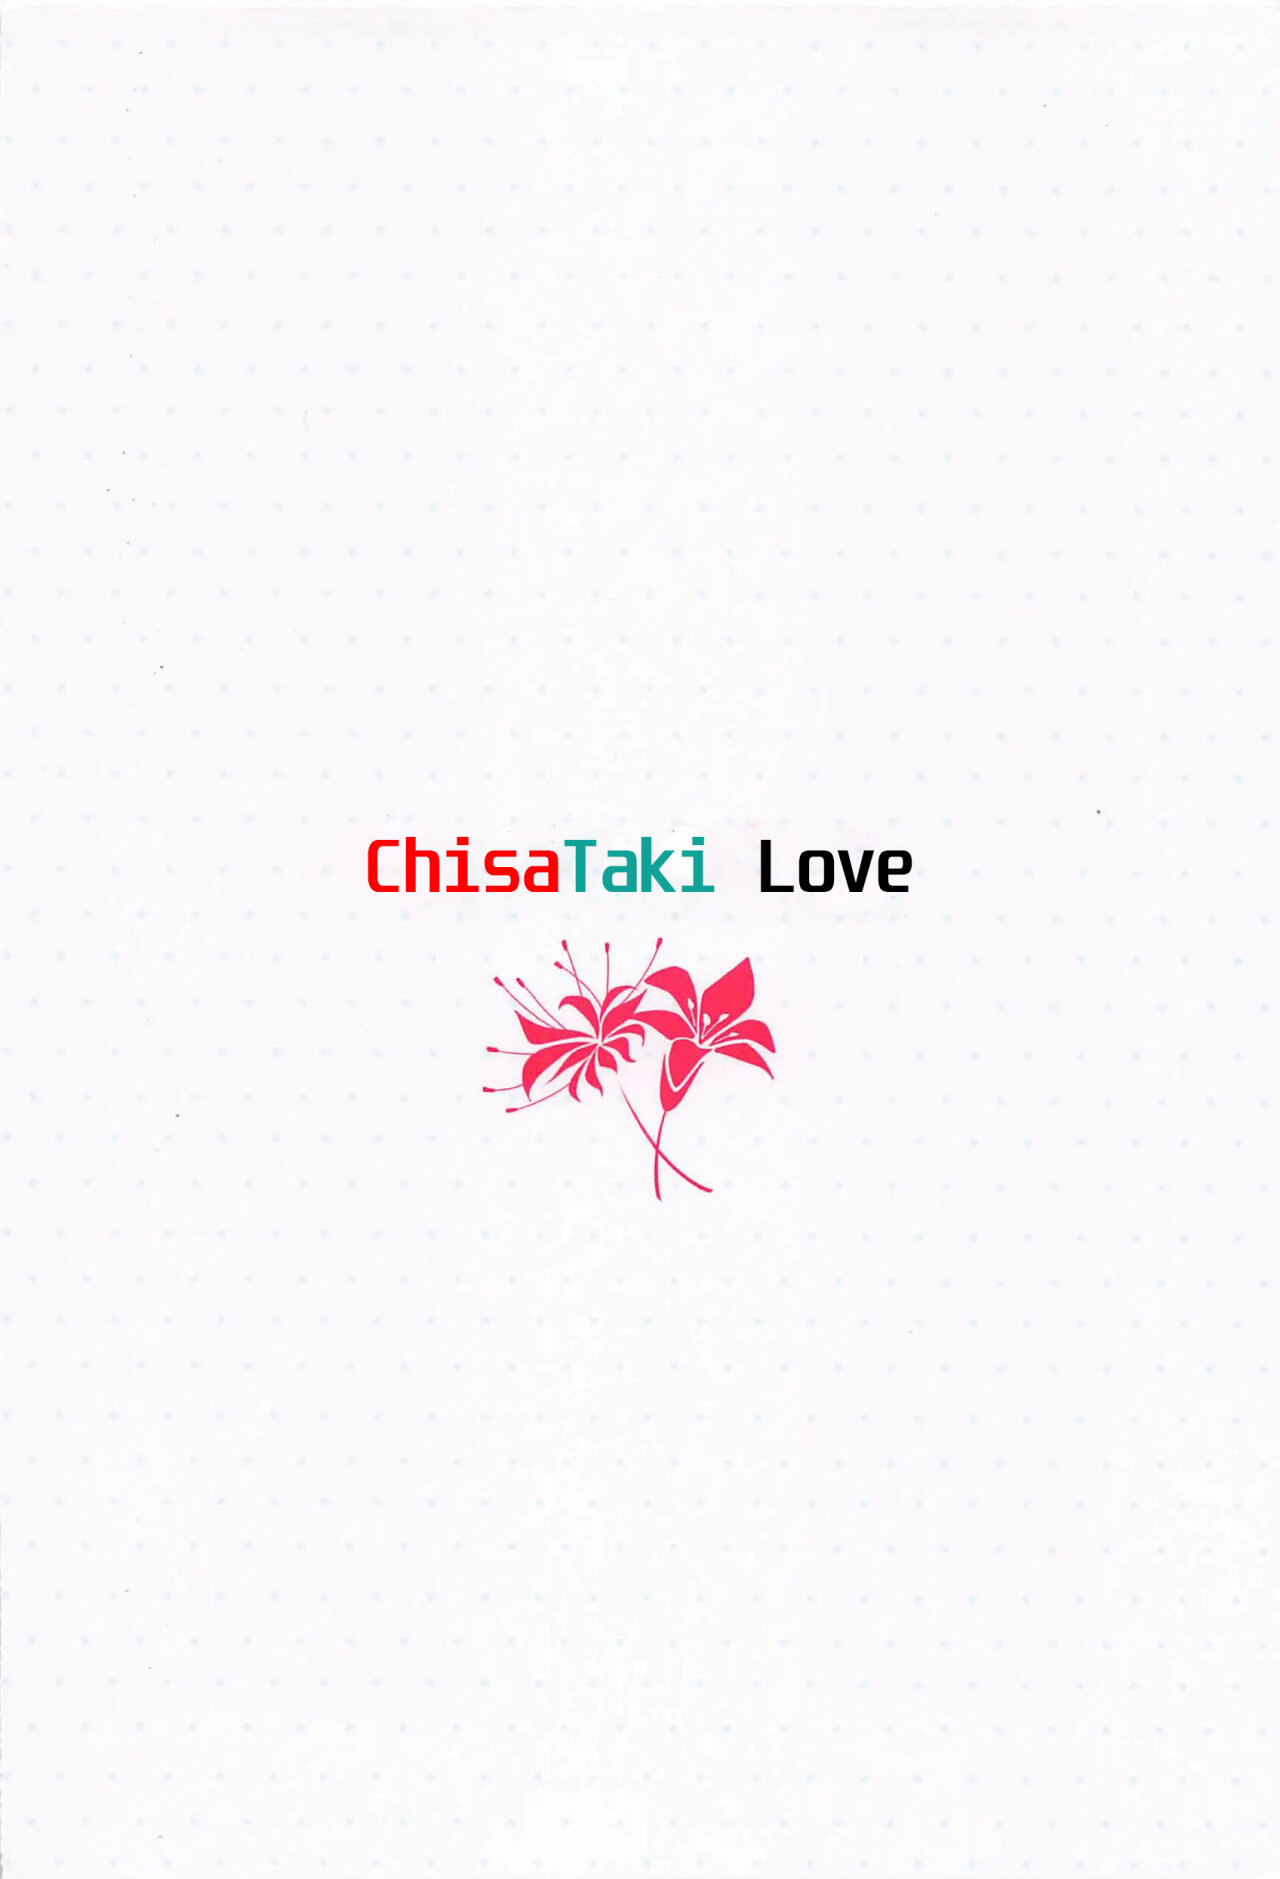 ChisaTaki Love - 21